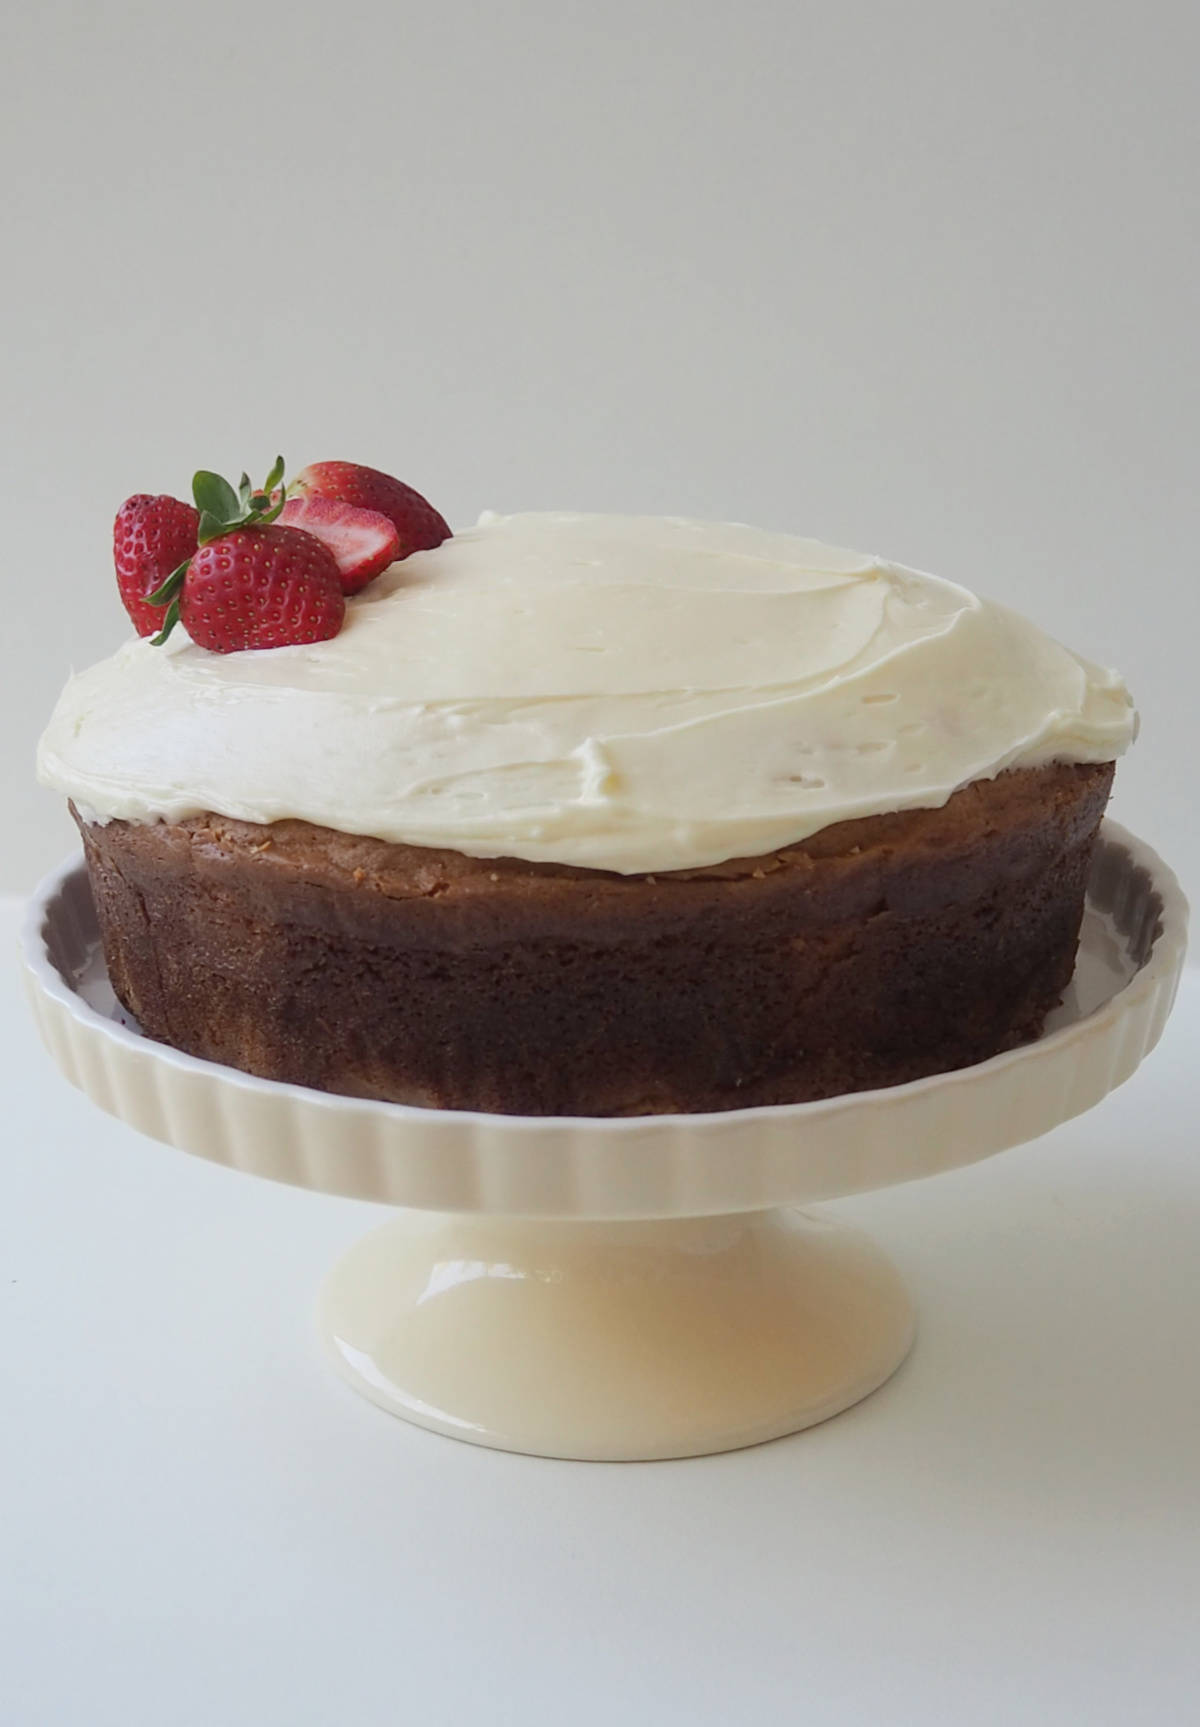 White chocolate mud cake topped with white chocolate ganache and strawberries on a cream cake platter.